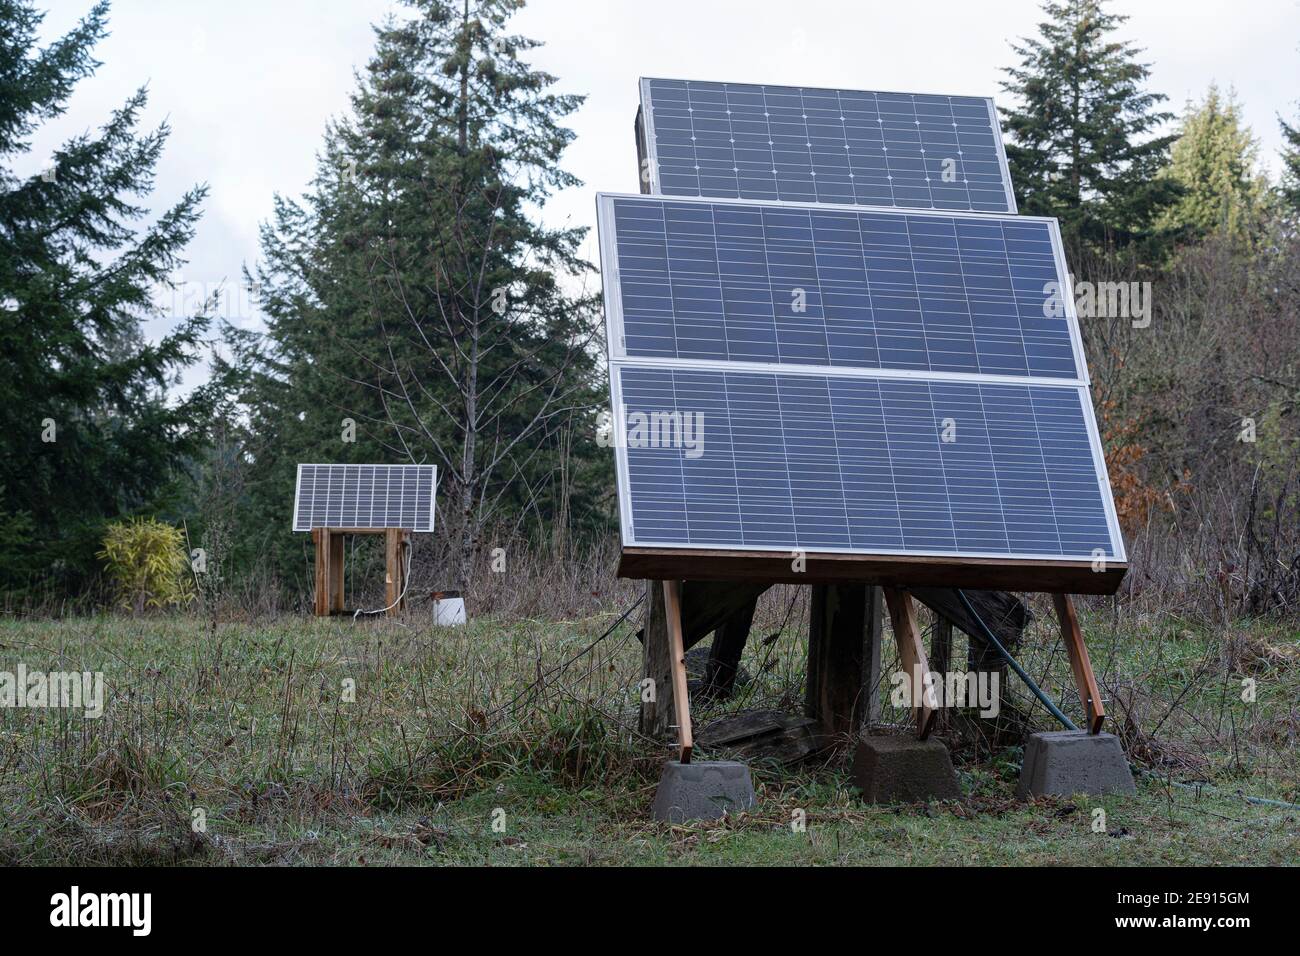 diy wood solar panel stand